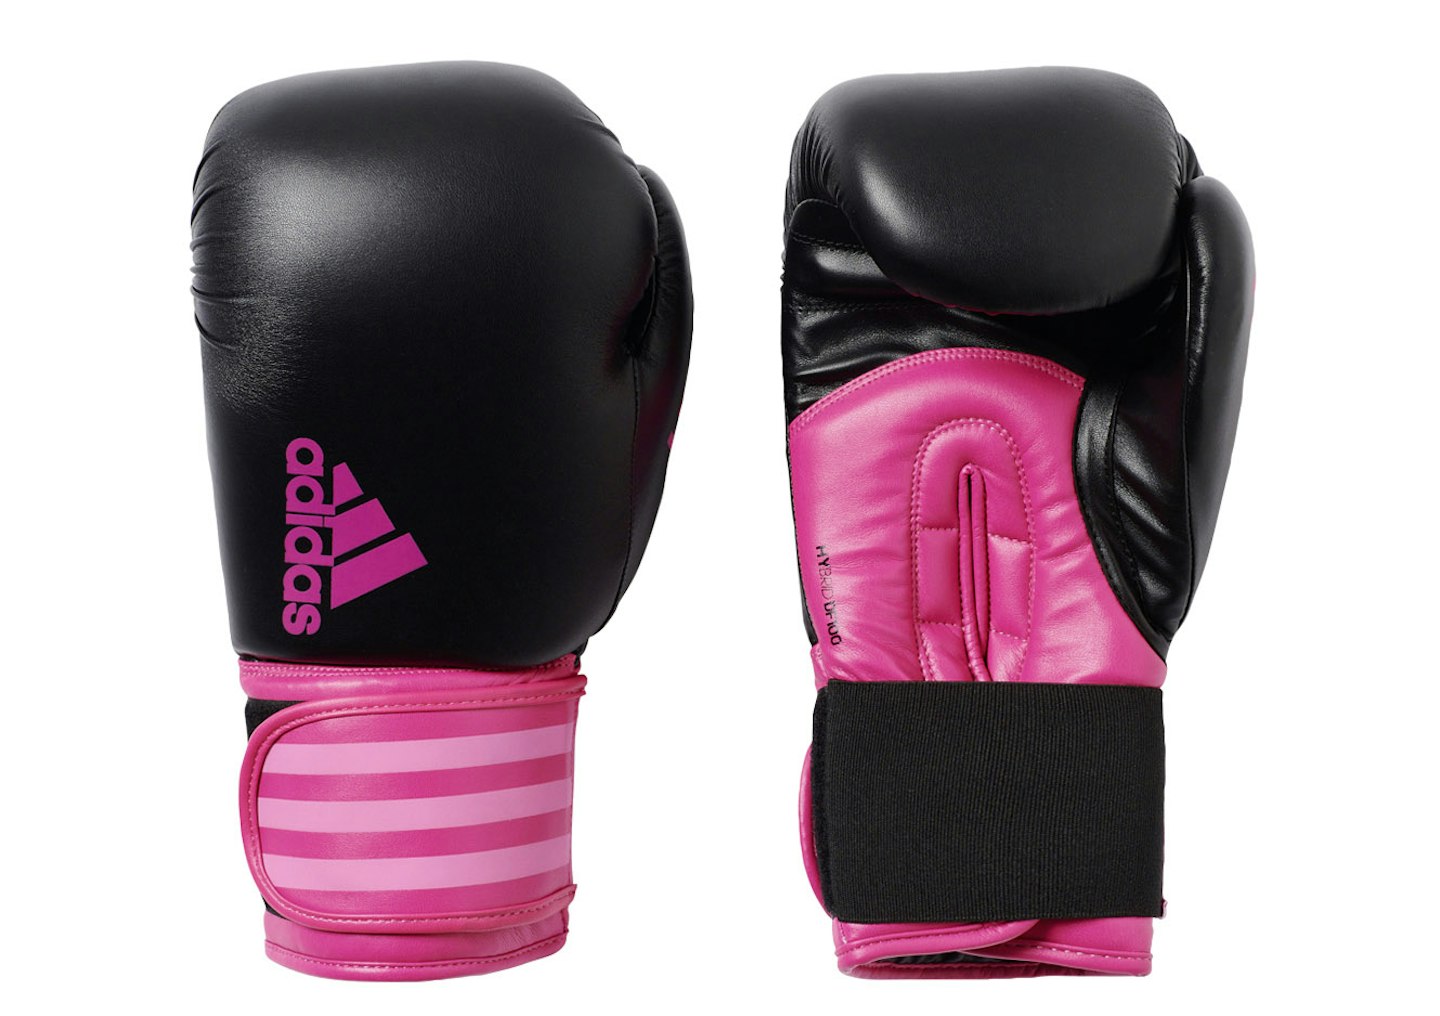 Adidas-boxing-gloves